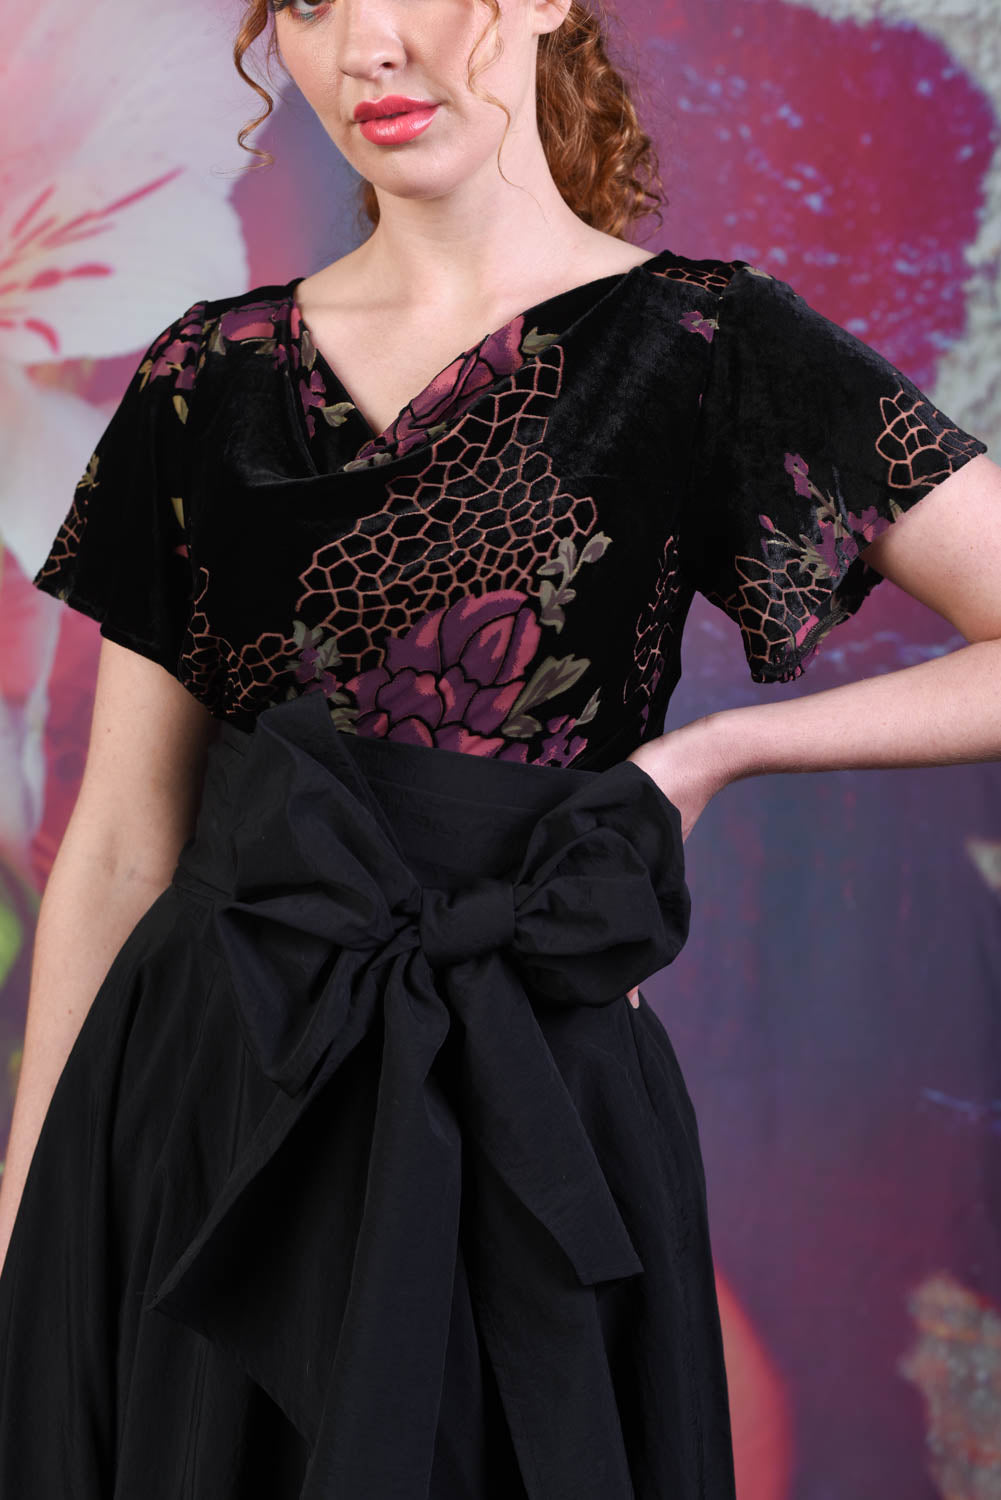 Model wearing Bijou Eden Top - Black Floral by Annah Stretton